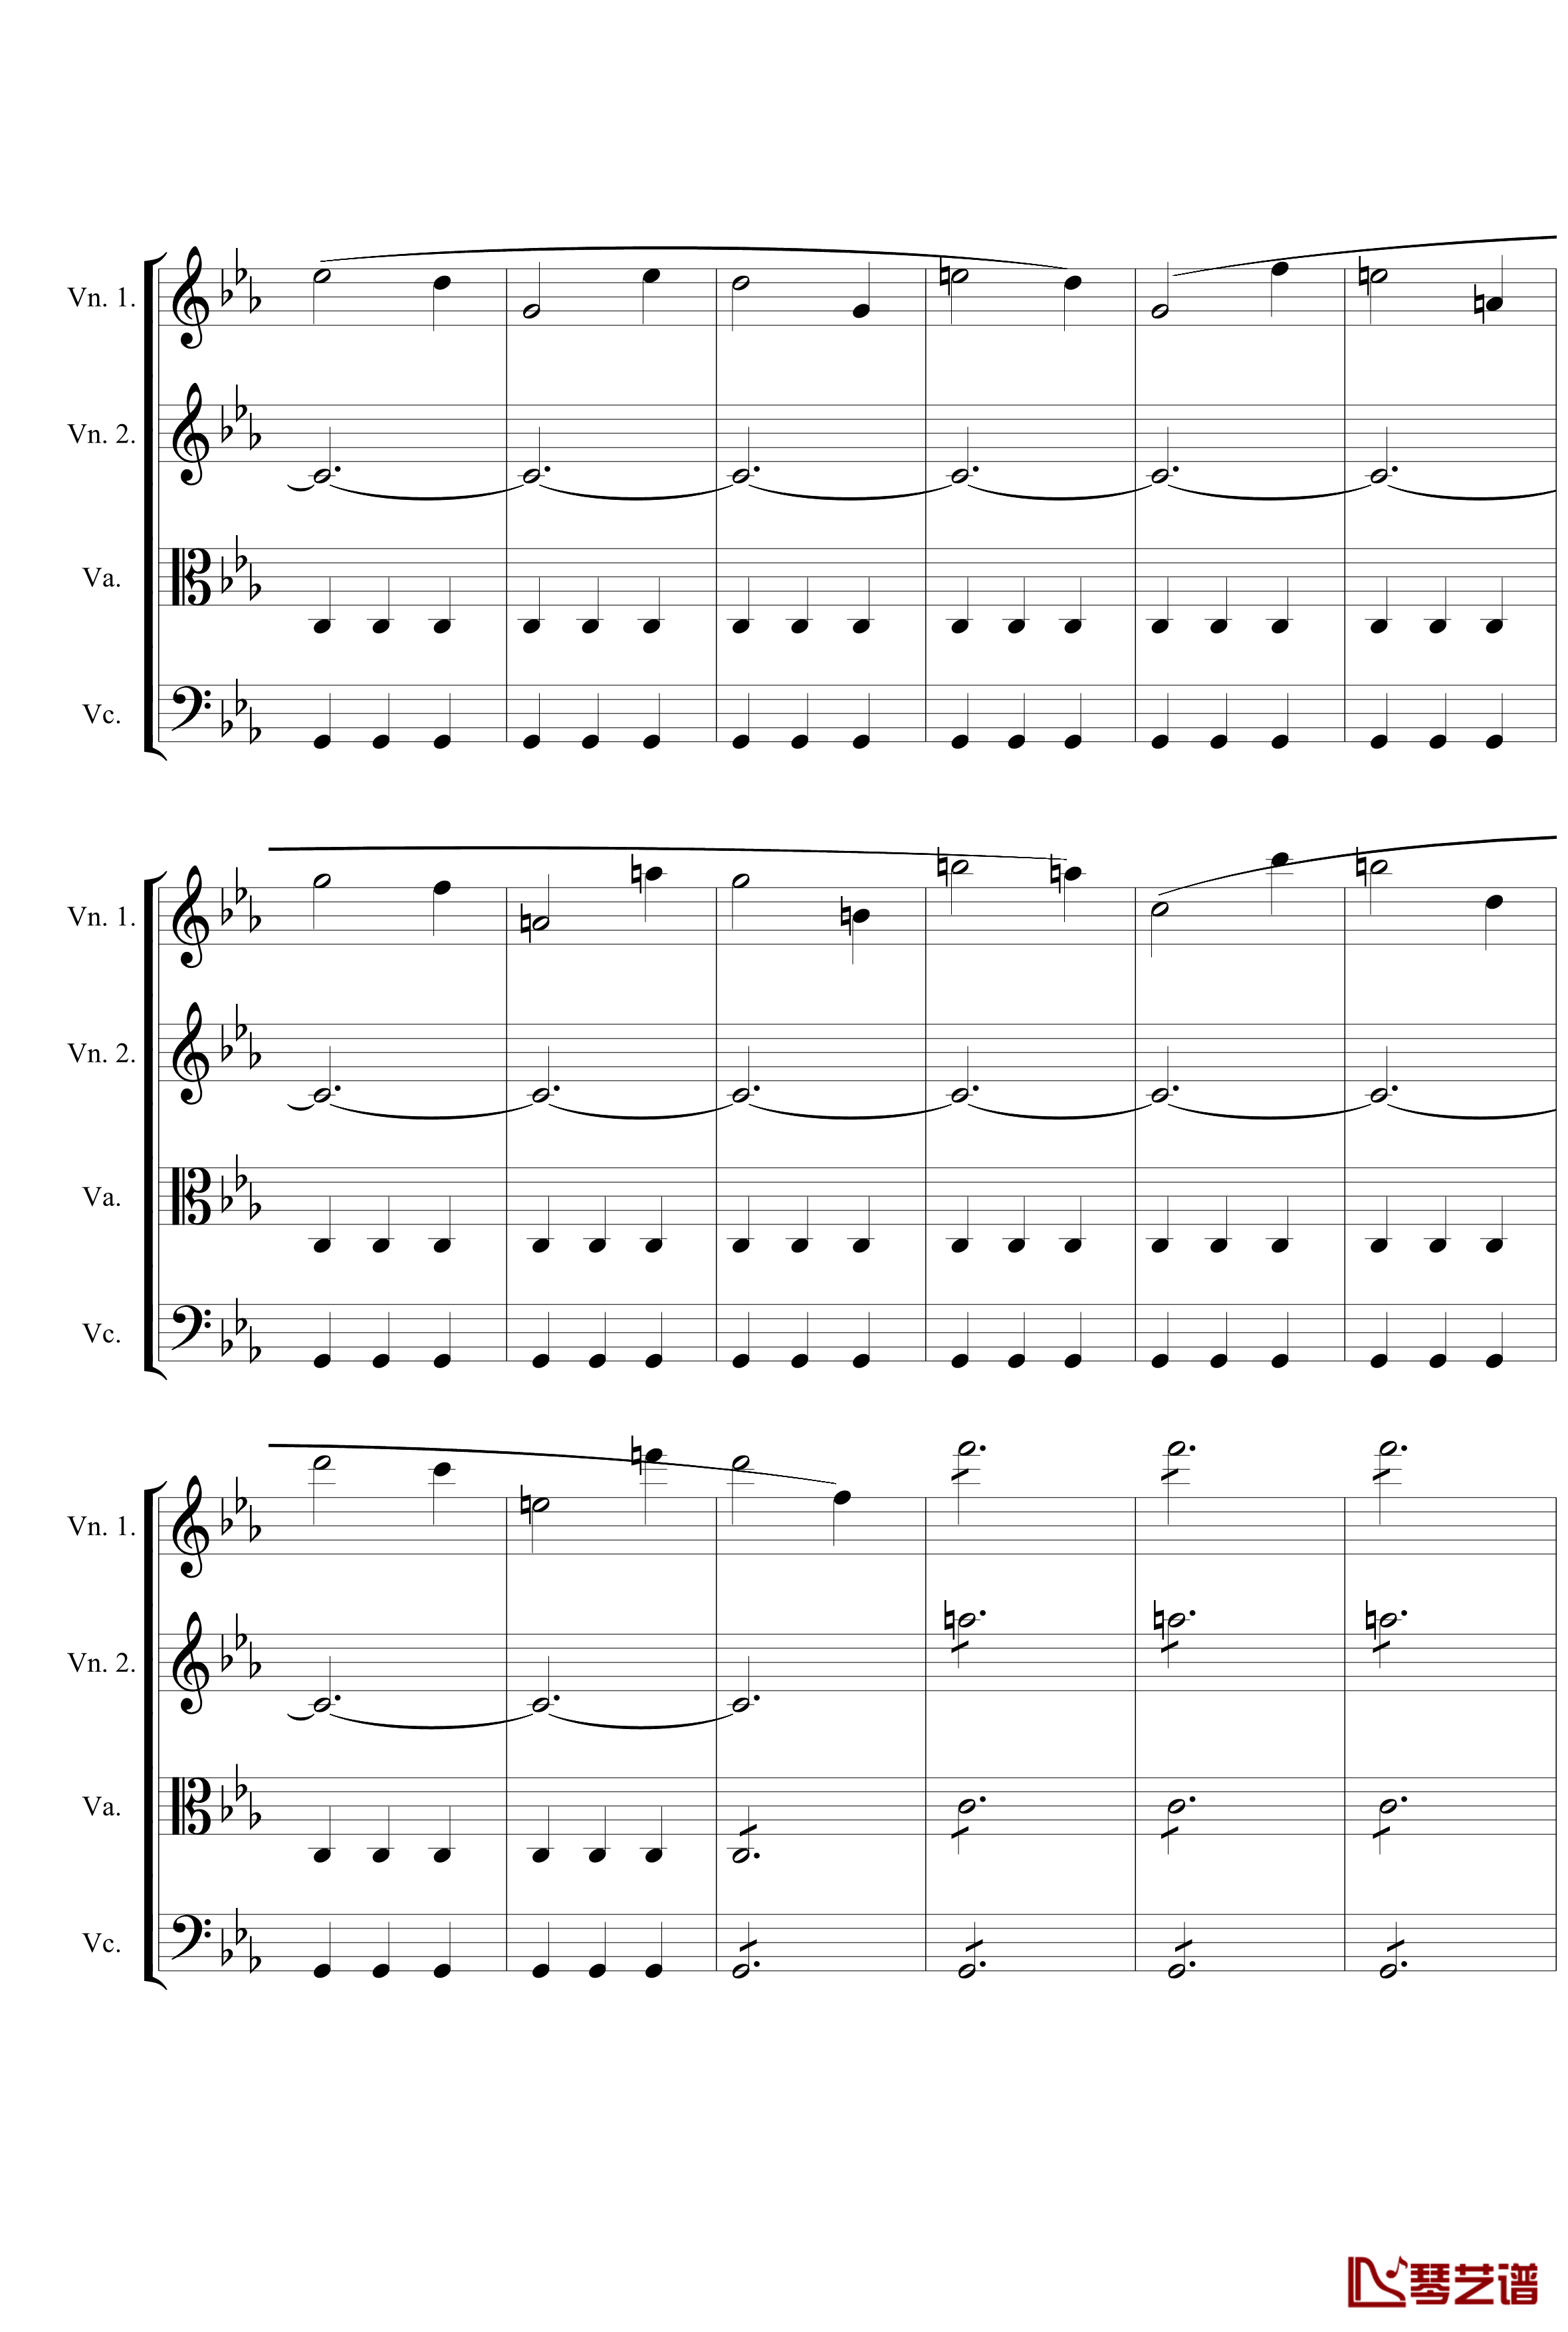 Symphony No.5 in C Minor 3rd钢琴谱-String quartet-贝多芬-beethoven23